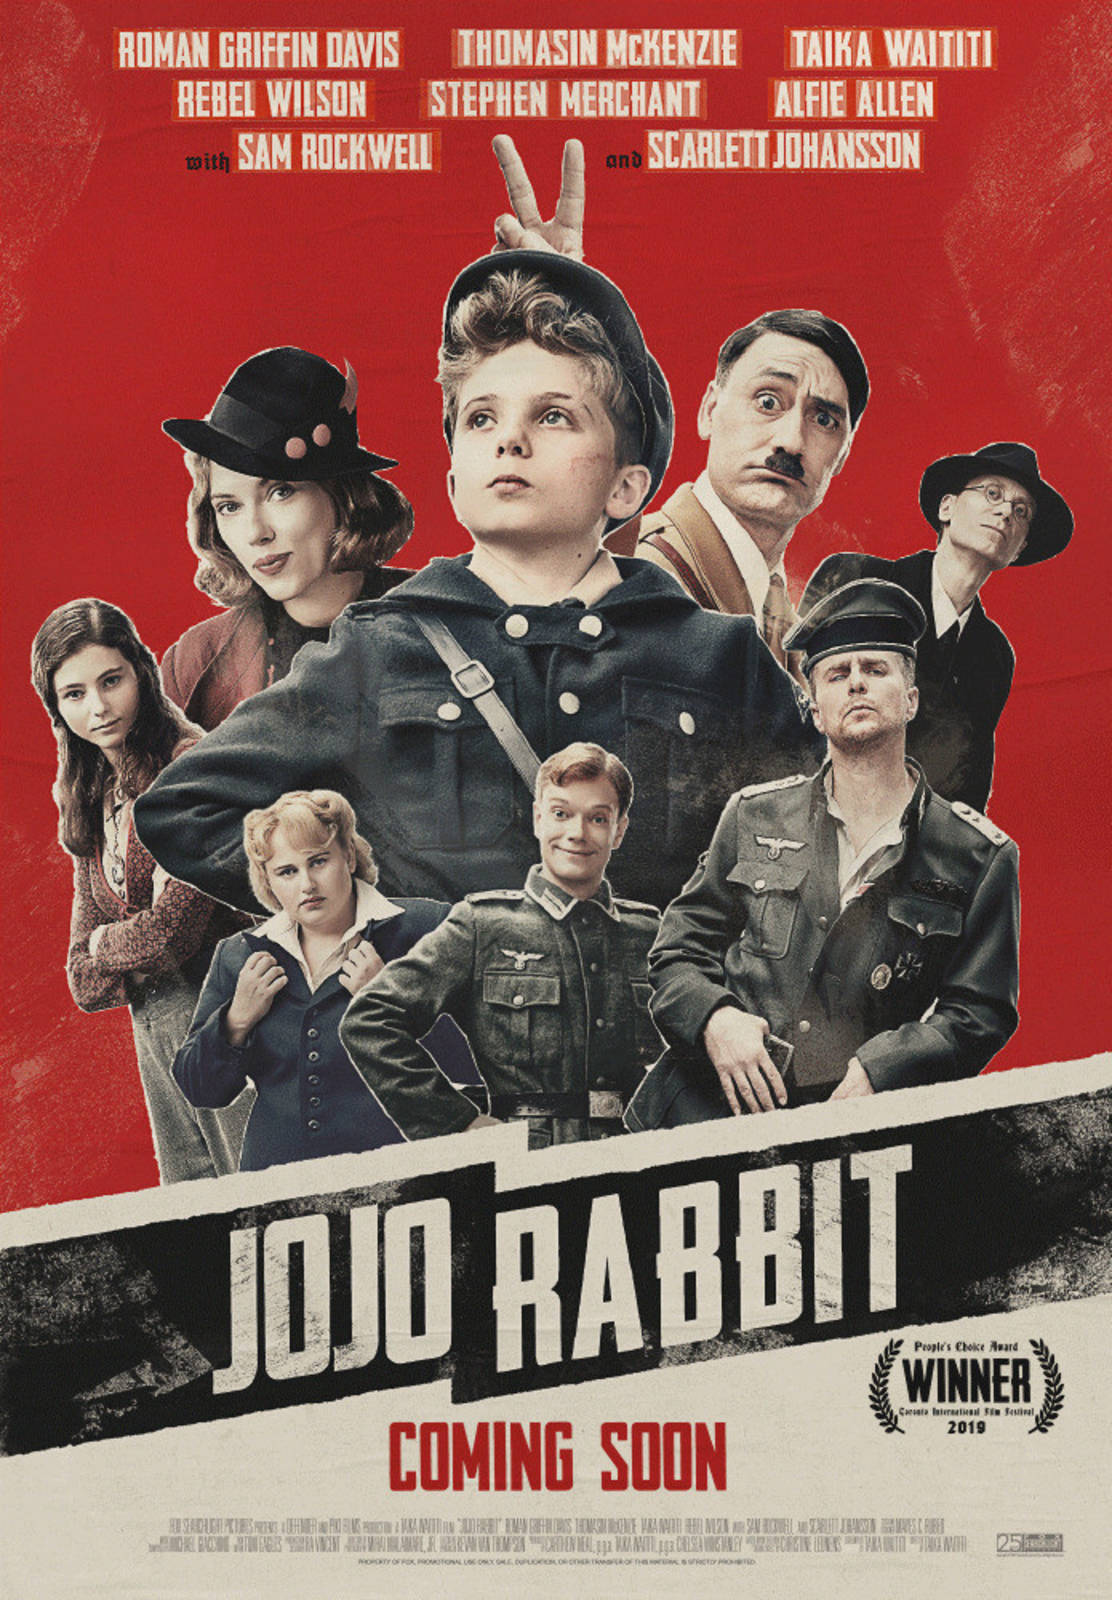 Jojo Rabbit Deutschland